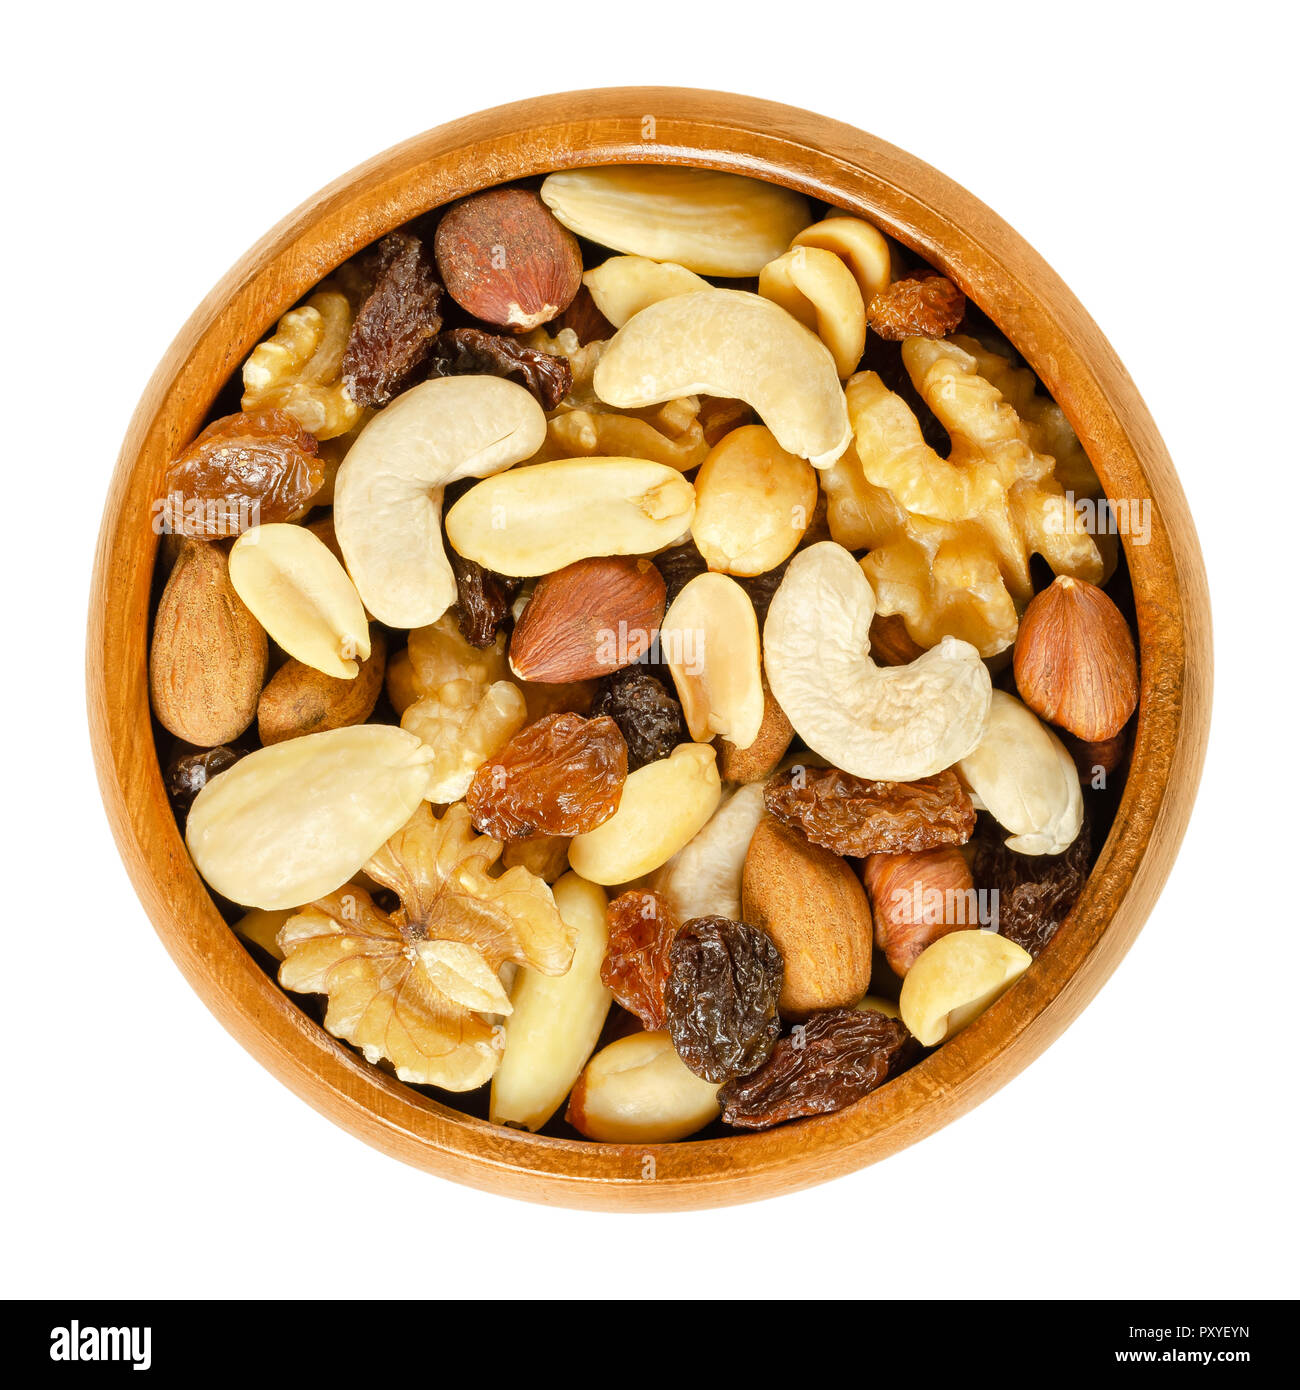 Student food in wooden bowl. Student fodder. Snack mix of dried almonds, cashews, peanuts, walnuts, hazelnuts and raisins. Trail mix. Stock Photo